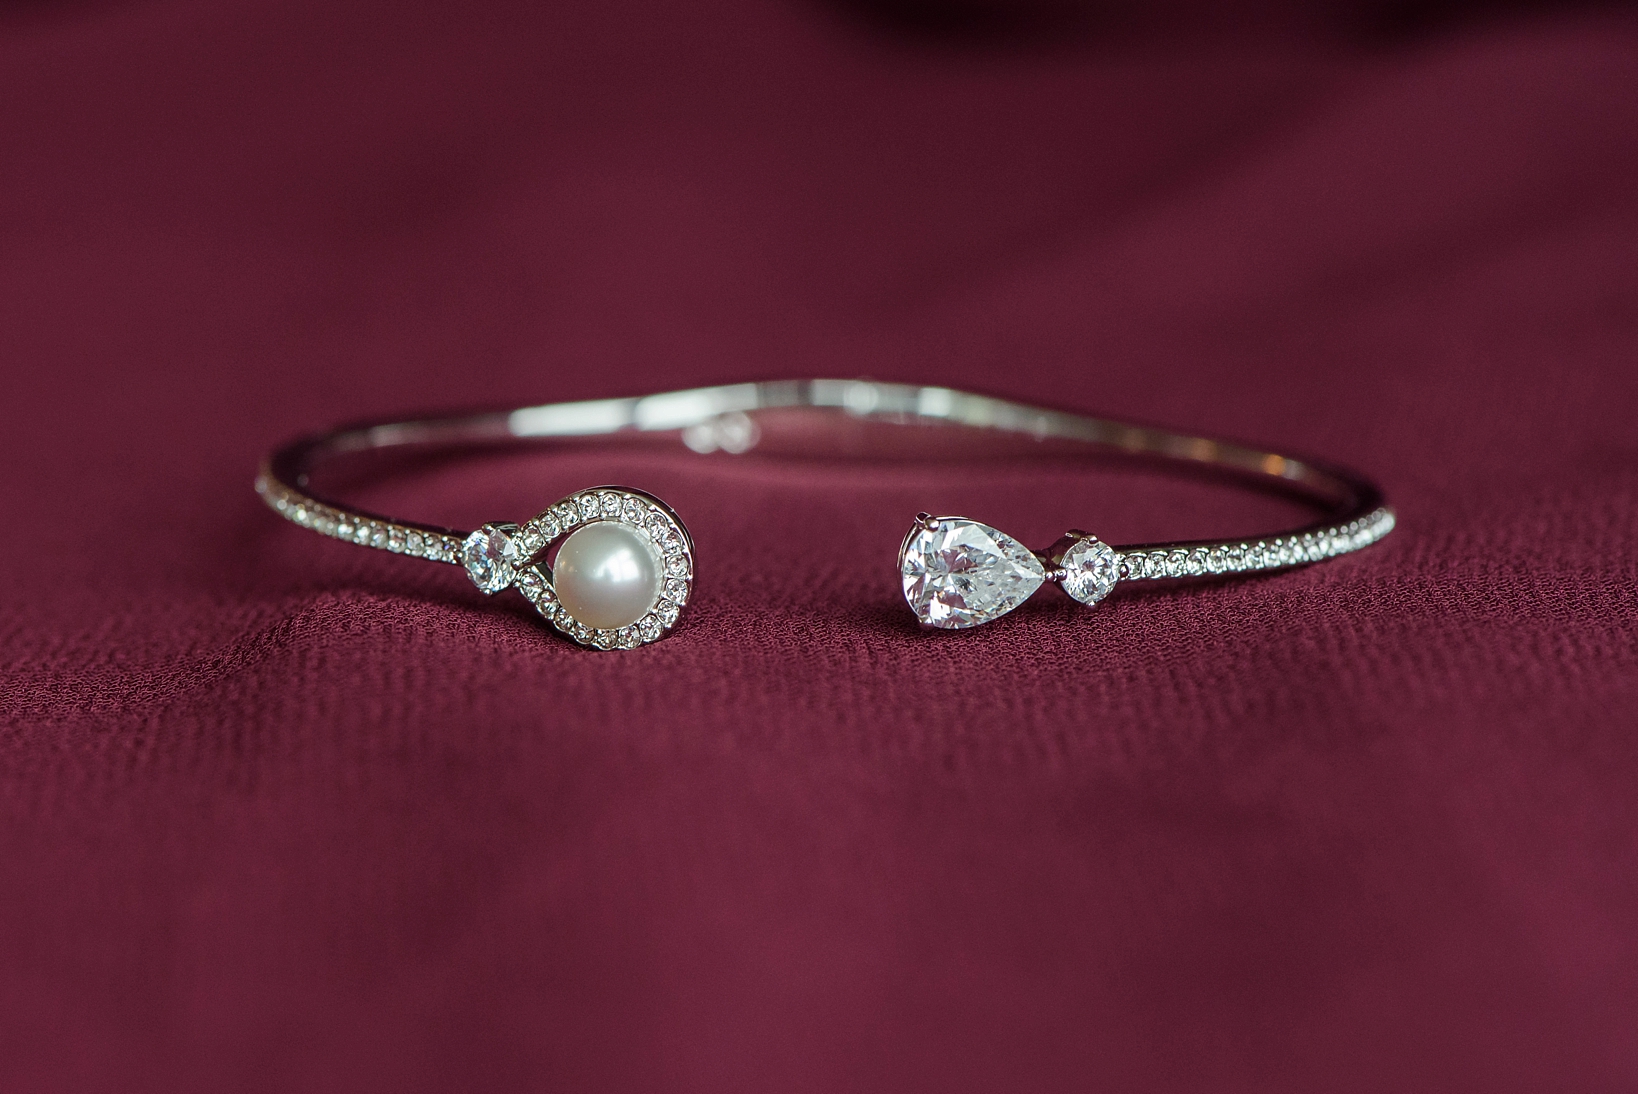 Bride's pearl and diamond bracelet against a merlot dress